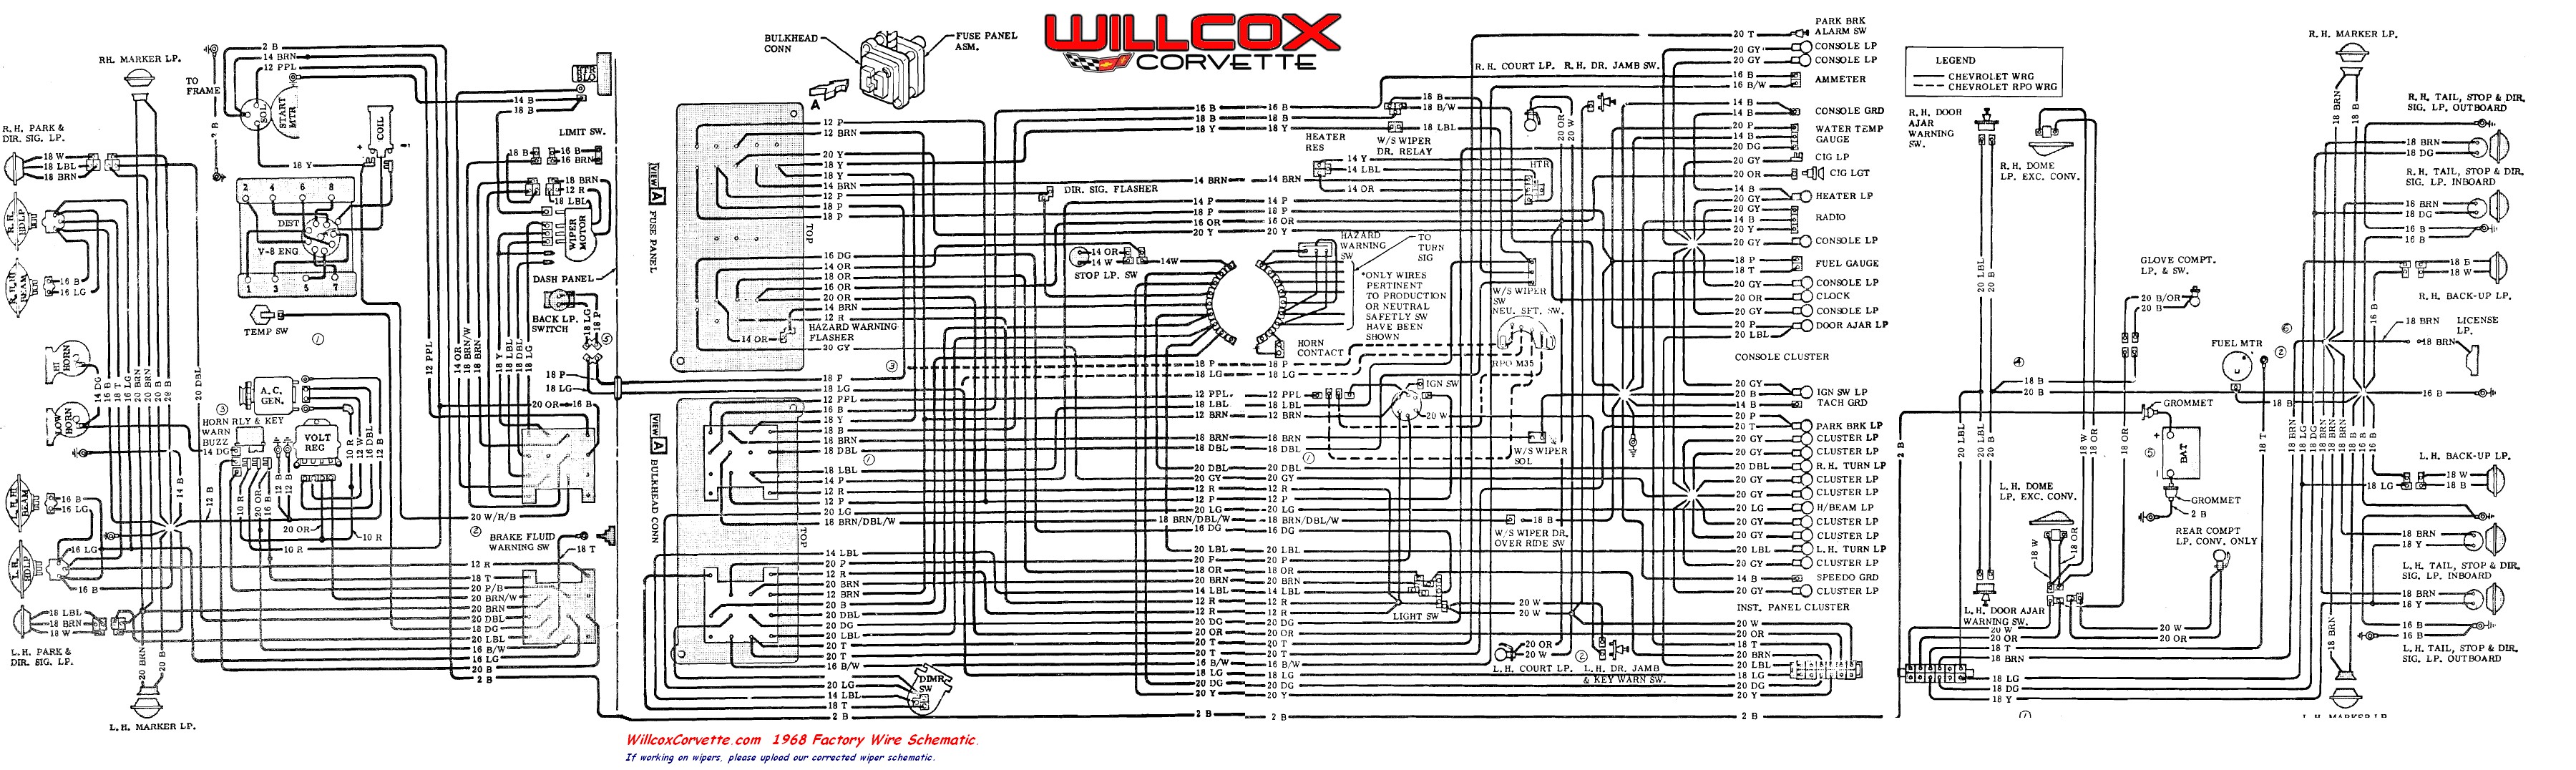 [DIAGRAM] 1981 Corvette Wiper Wiring Diagram FULL Version HD Quality